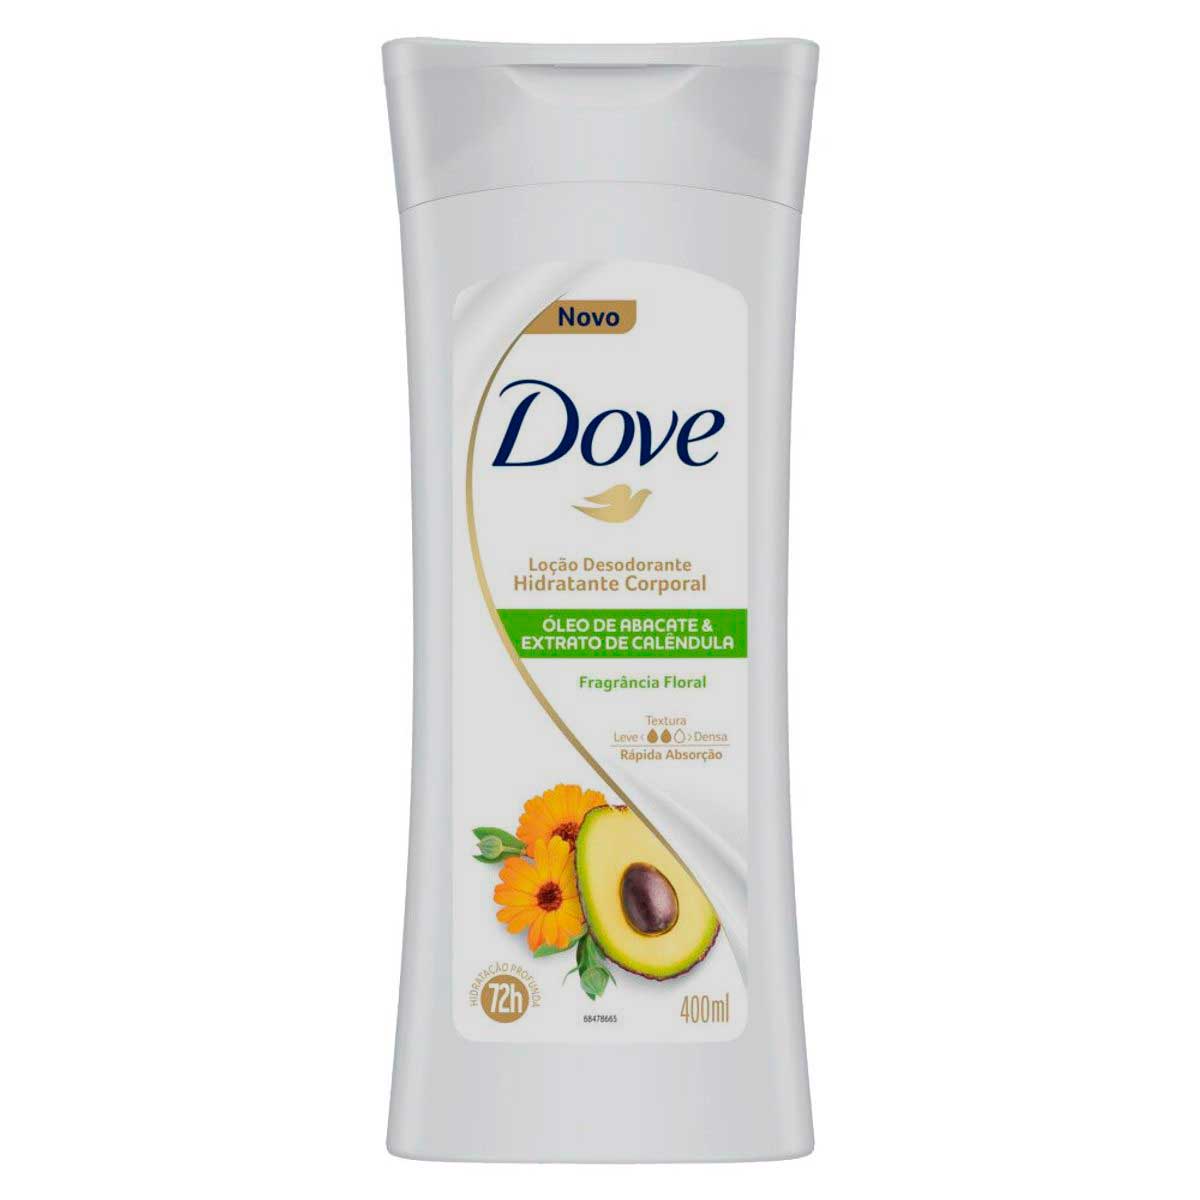 locao-desodorante-hidratante-corporal-dove-oleo-de-abacate-e-extrato-de-calendula-400-ml-1.jpg